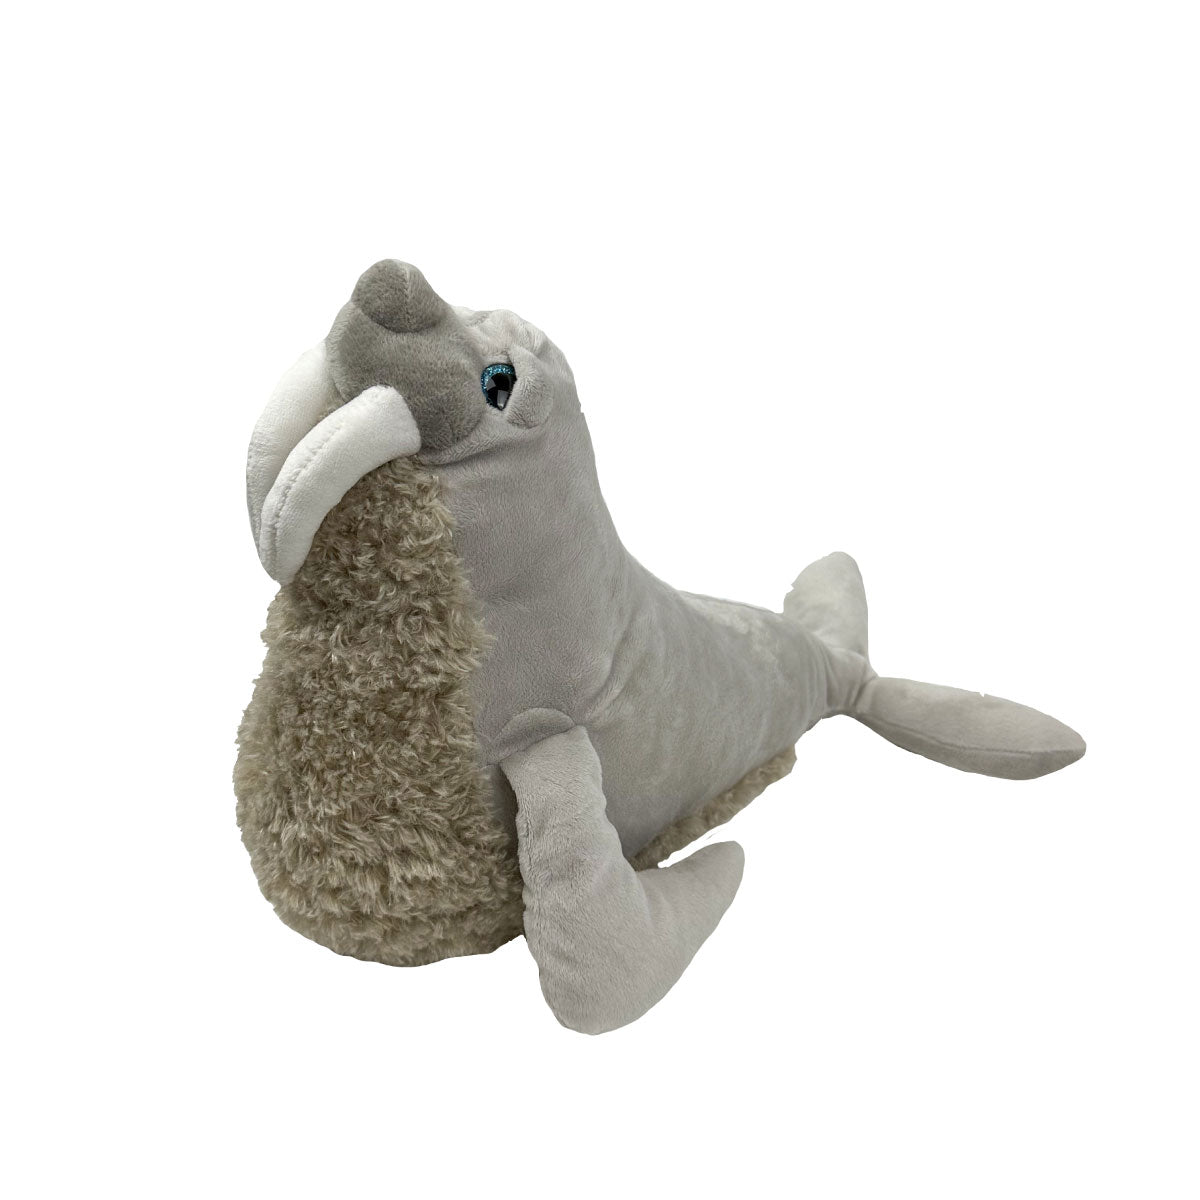 Winston the Walrus 16" stuffed animal